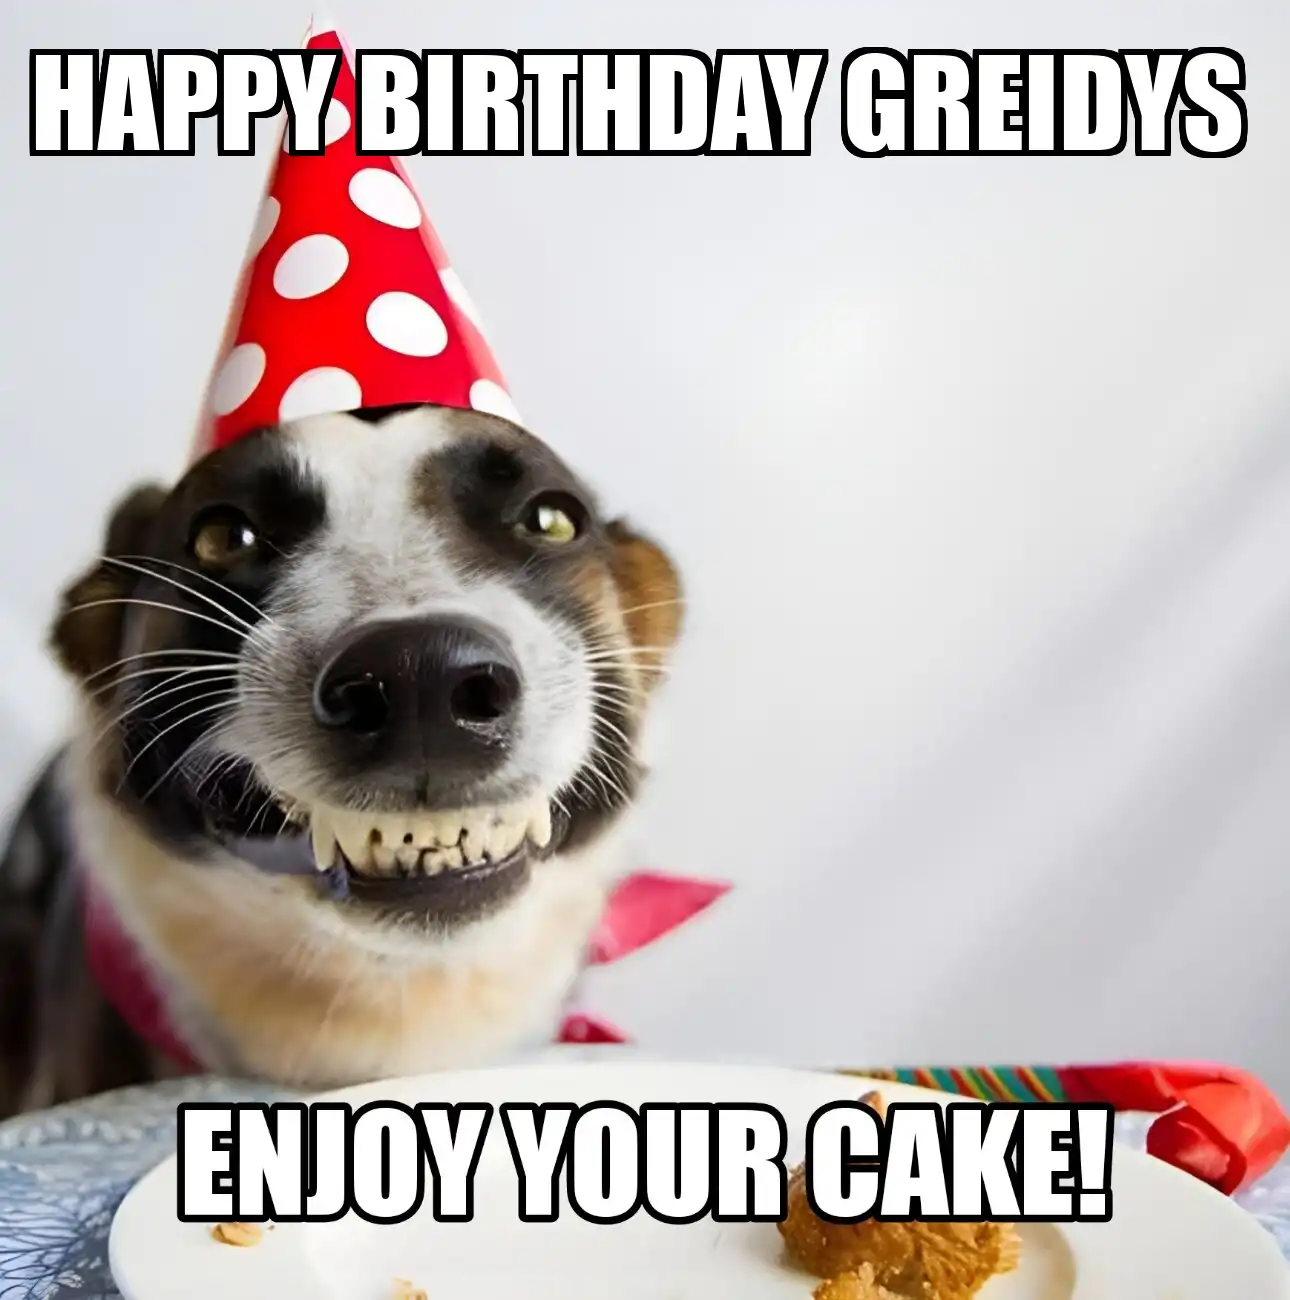 Happy Birthday Greidys Enjoy Your Cake Dog Meme